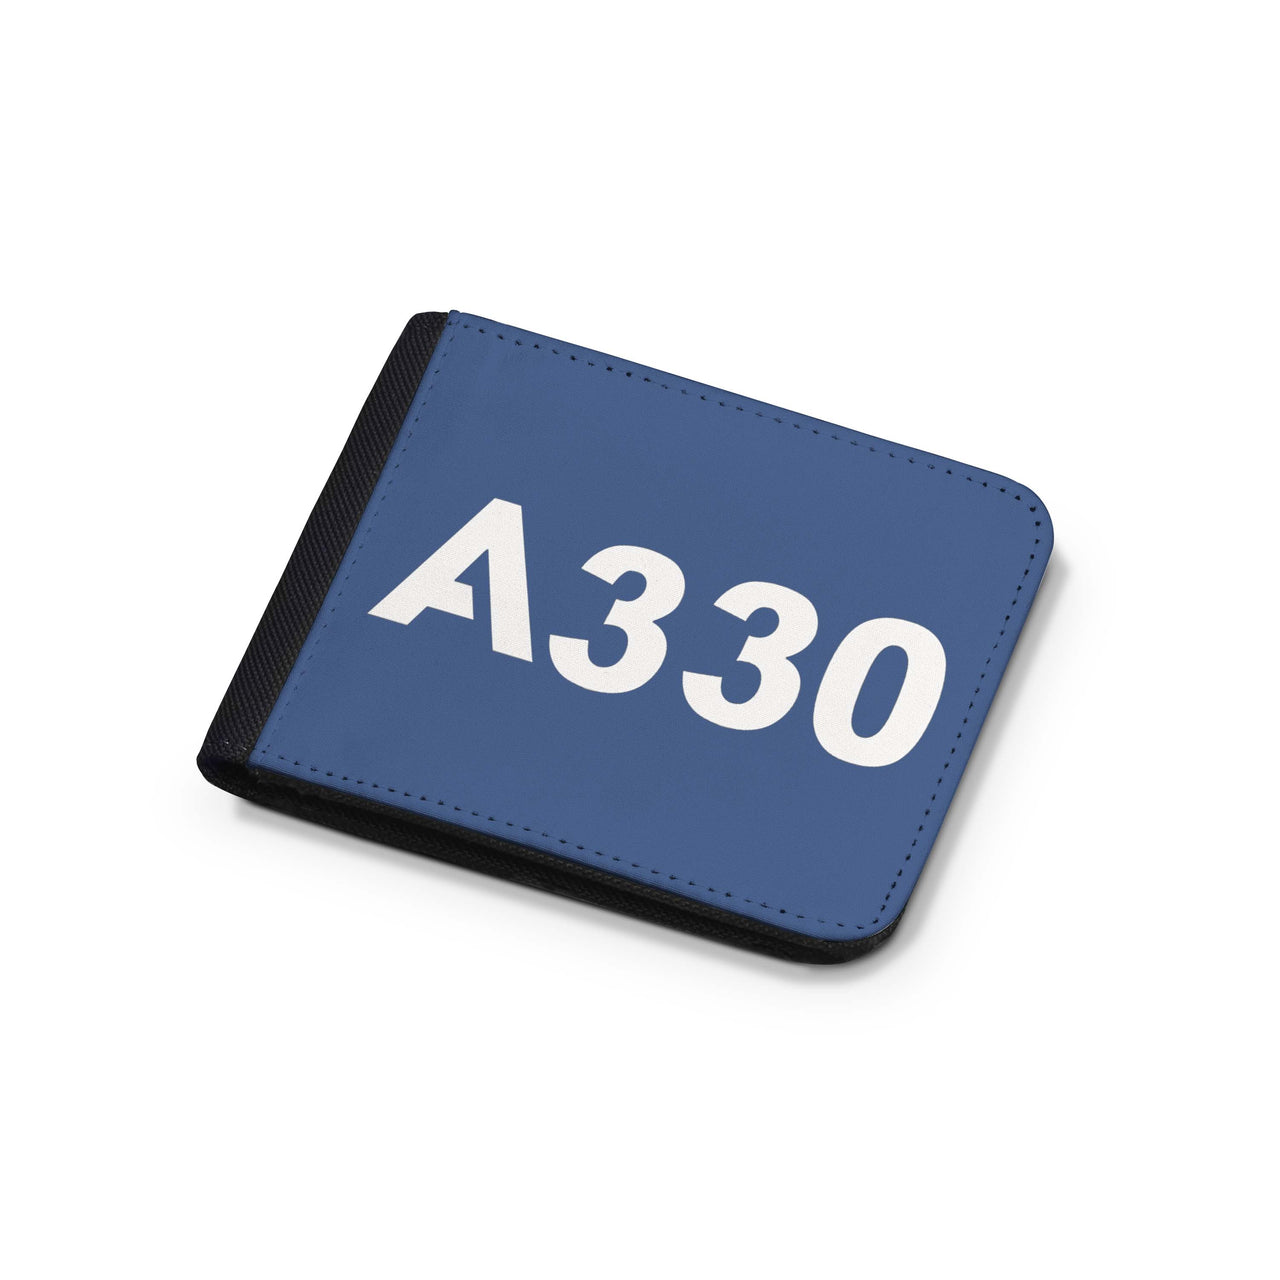 A330 Flat Text Designed Wallets